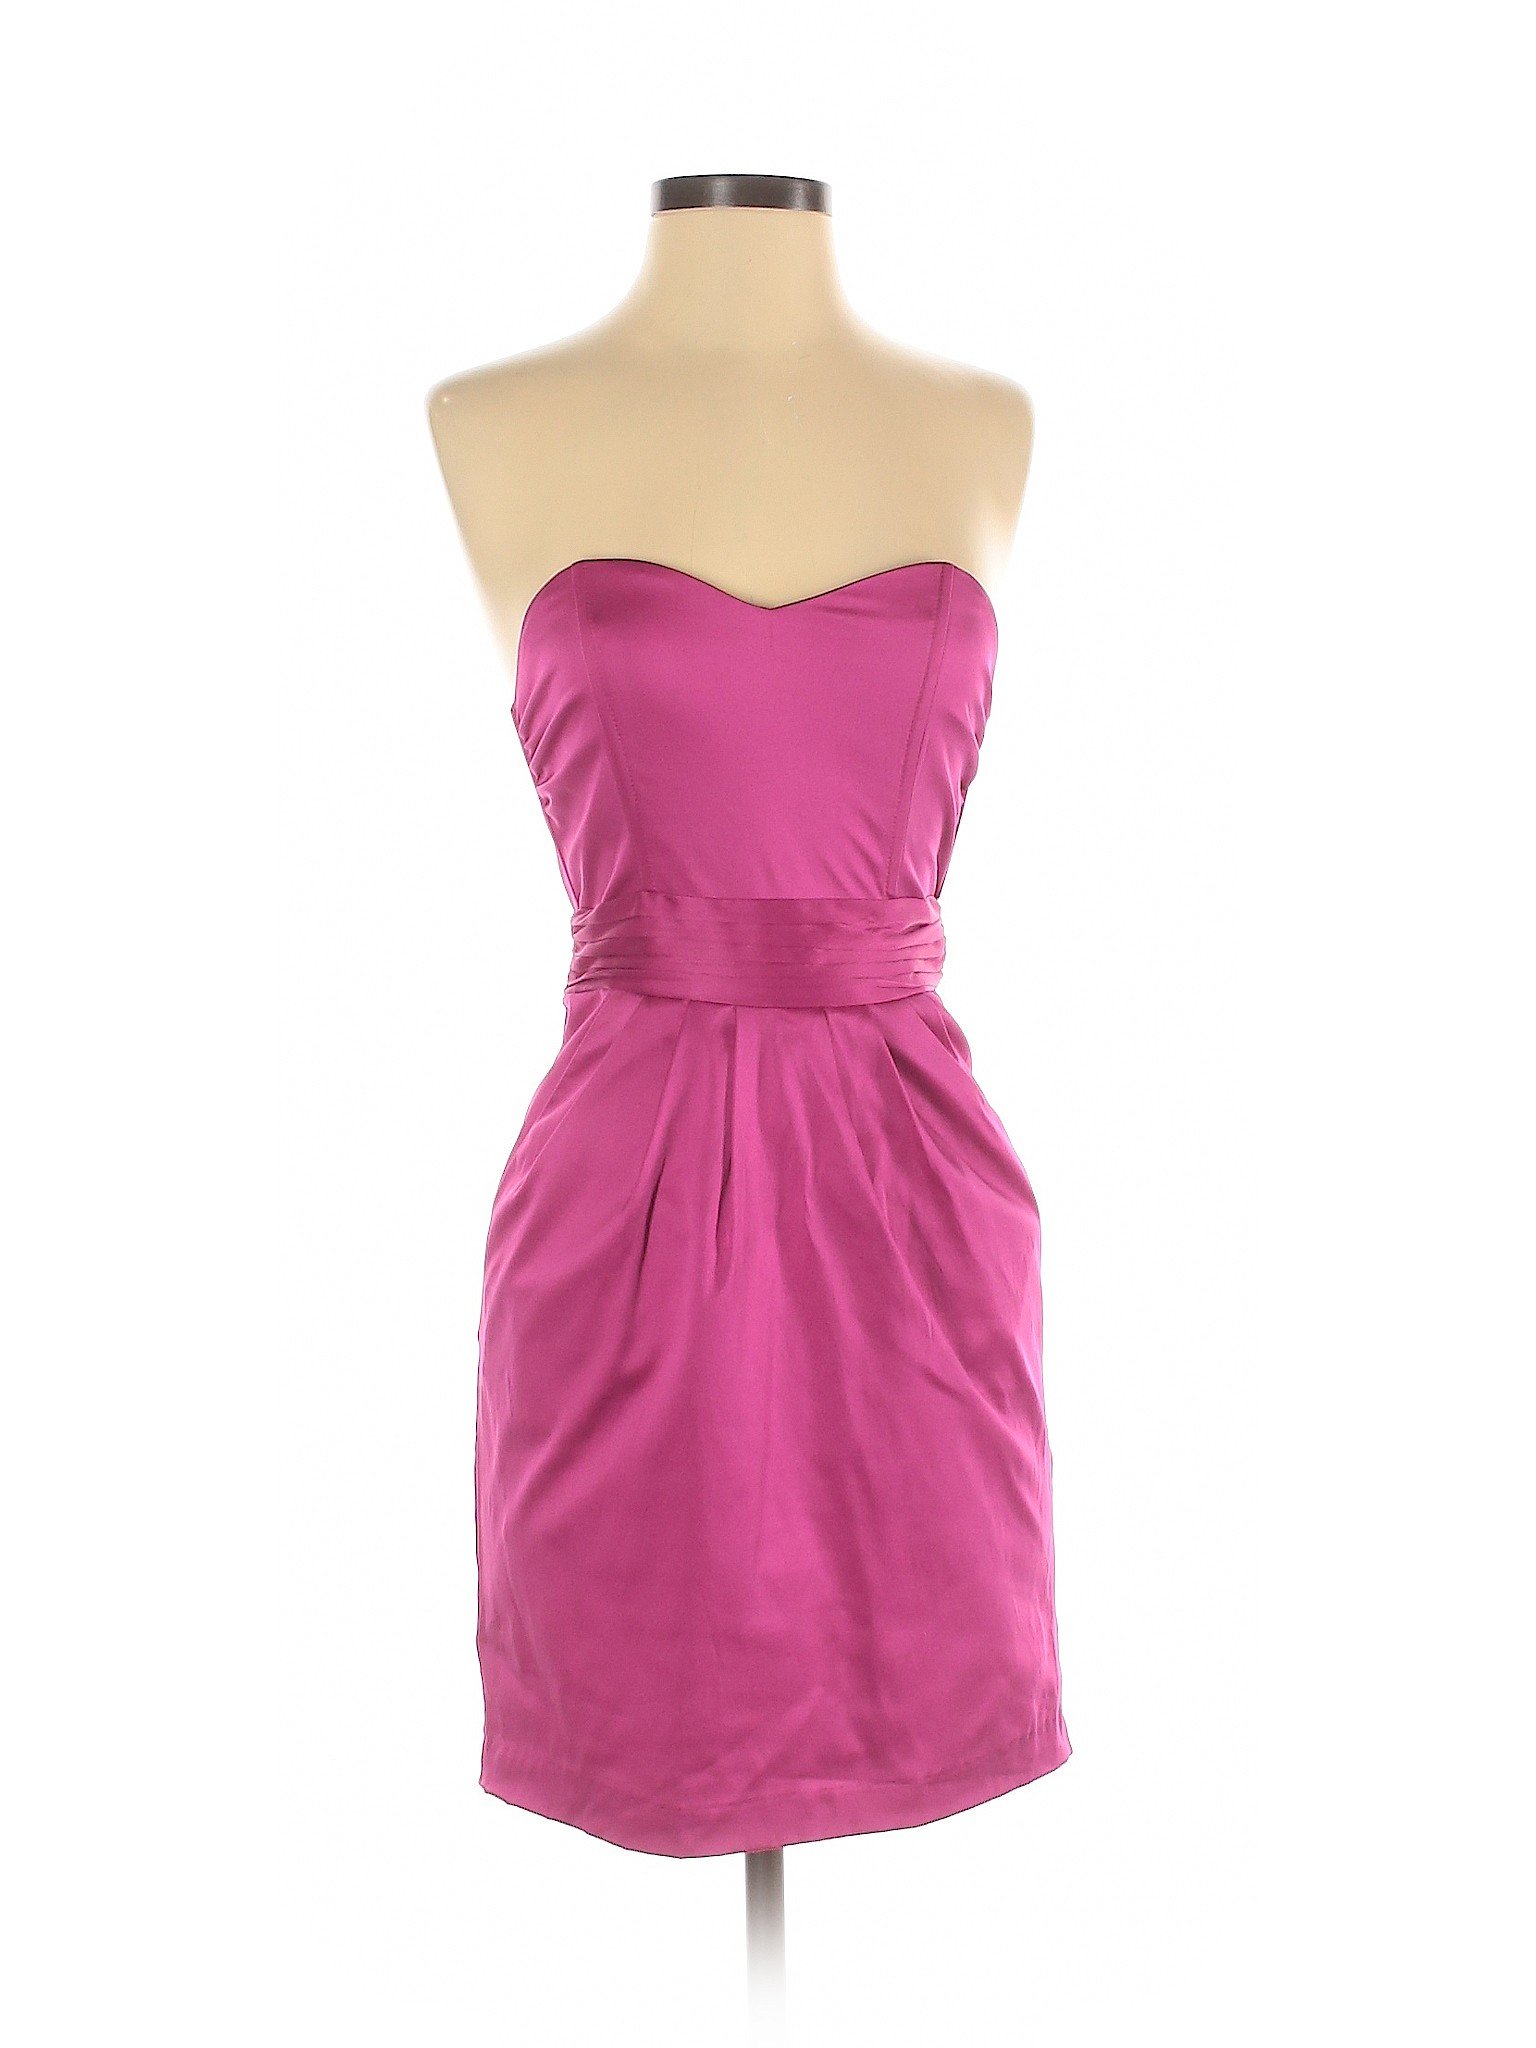 H&M Women Pink Cocktail Dress 4 | eBay